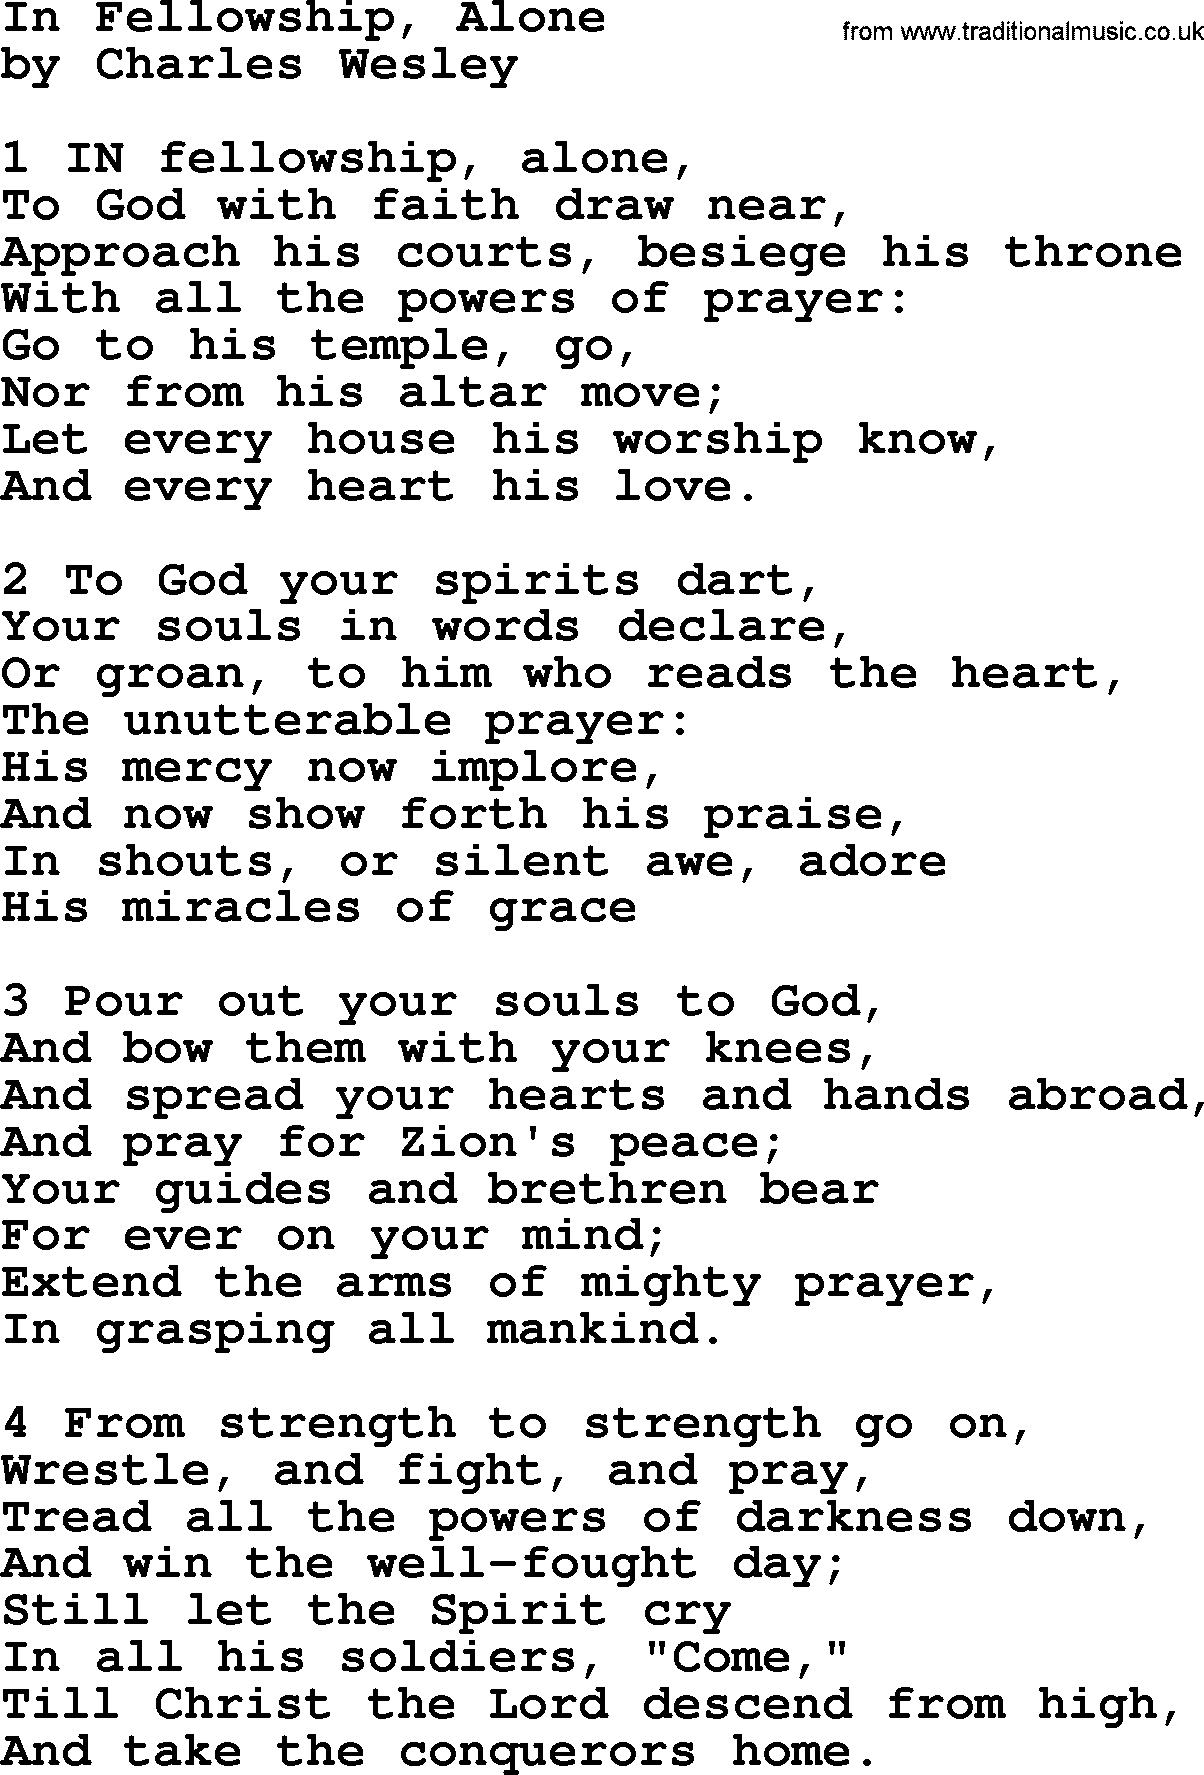 Charles Wesley hymn: In Fellowship, Alone, lyrics